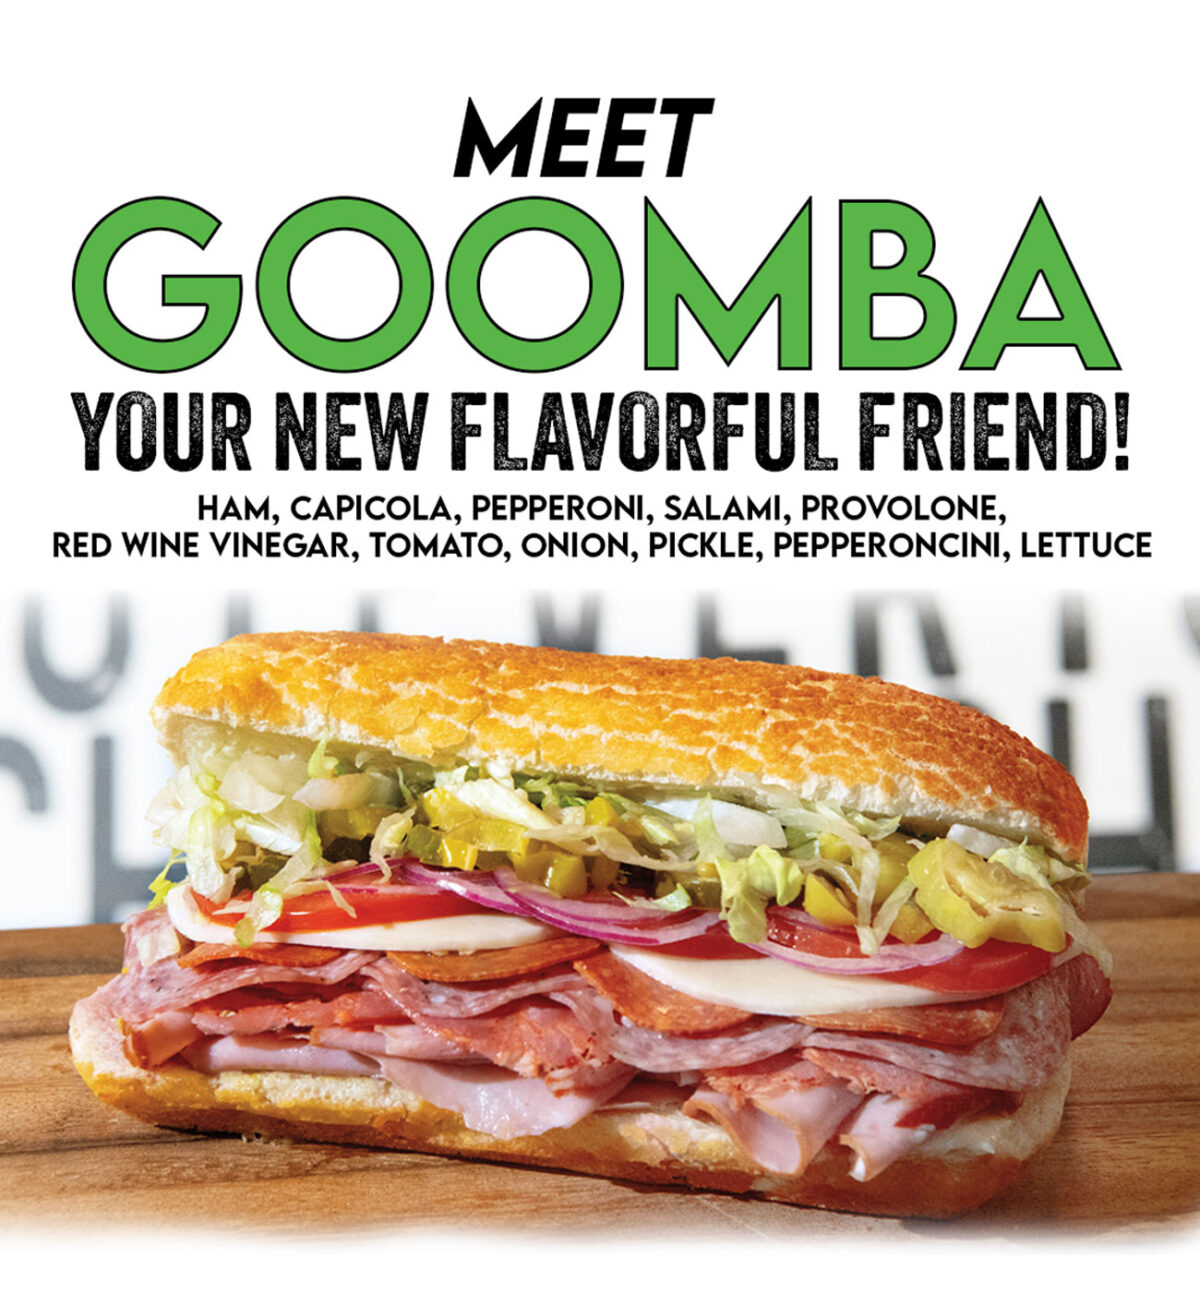 Meet Goomba Your new flavorful friend! Ham, Capicola, Pepperoni, Salami, Provolone, Red Wine Vinegar, Tomato, Onion, Pickle, Pepperoncini, Lettuce